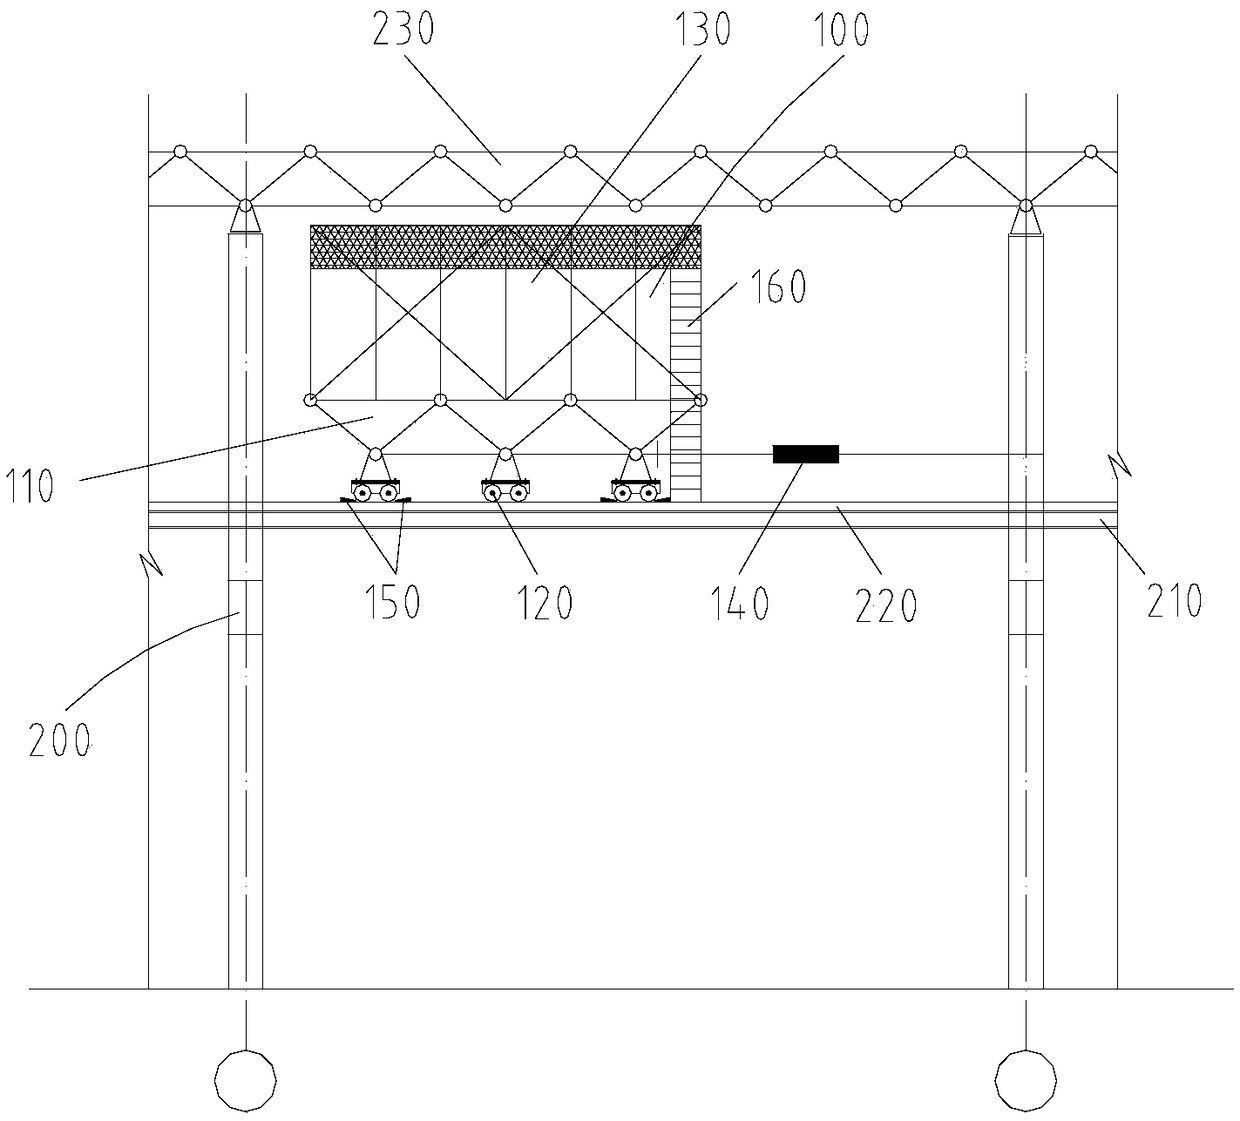 A grid high-altitude bulk sliding platform and high-altitude bulk construction method